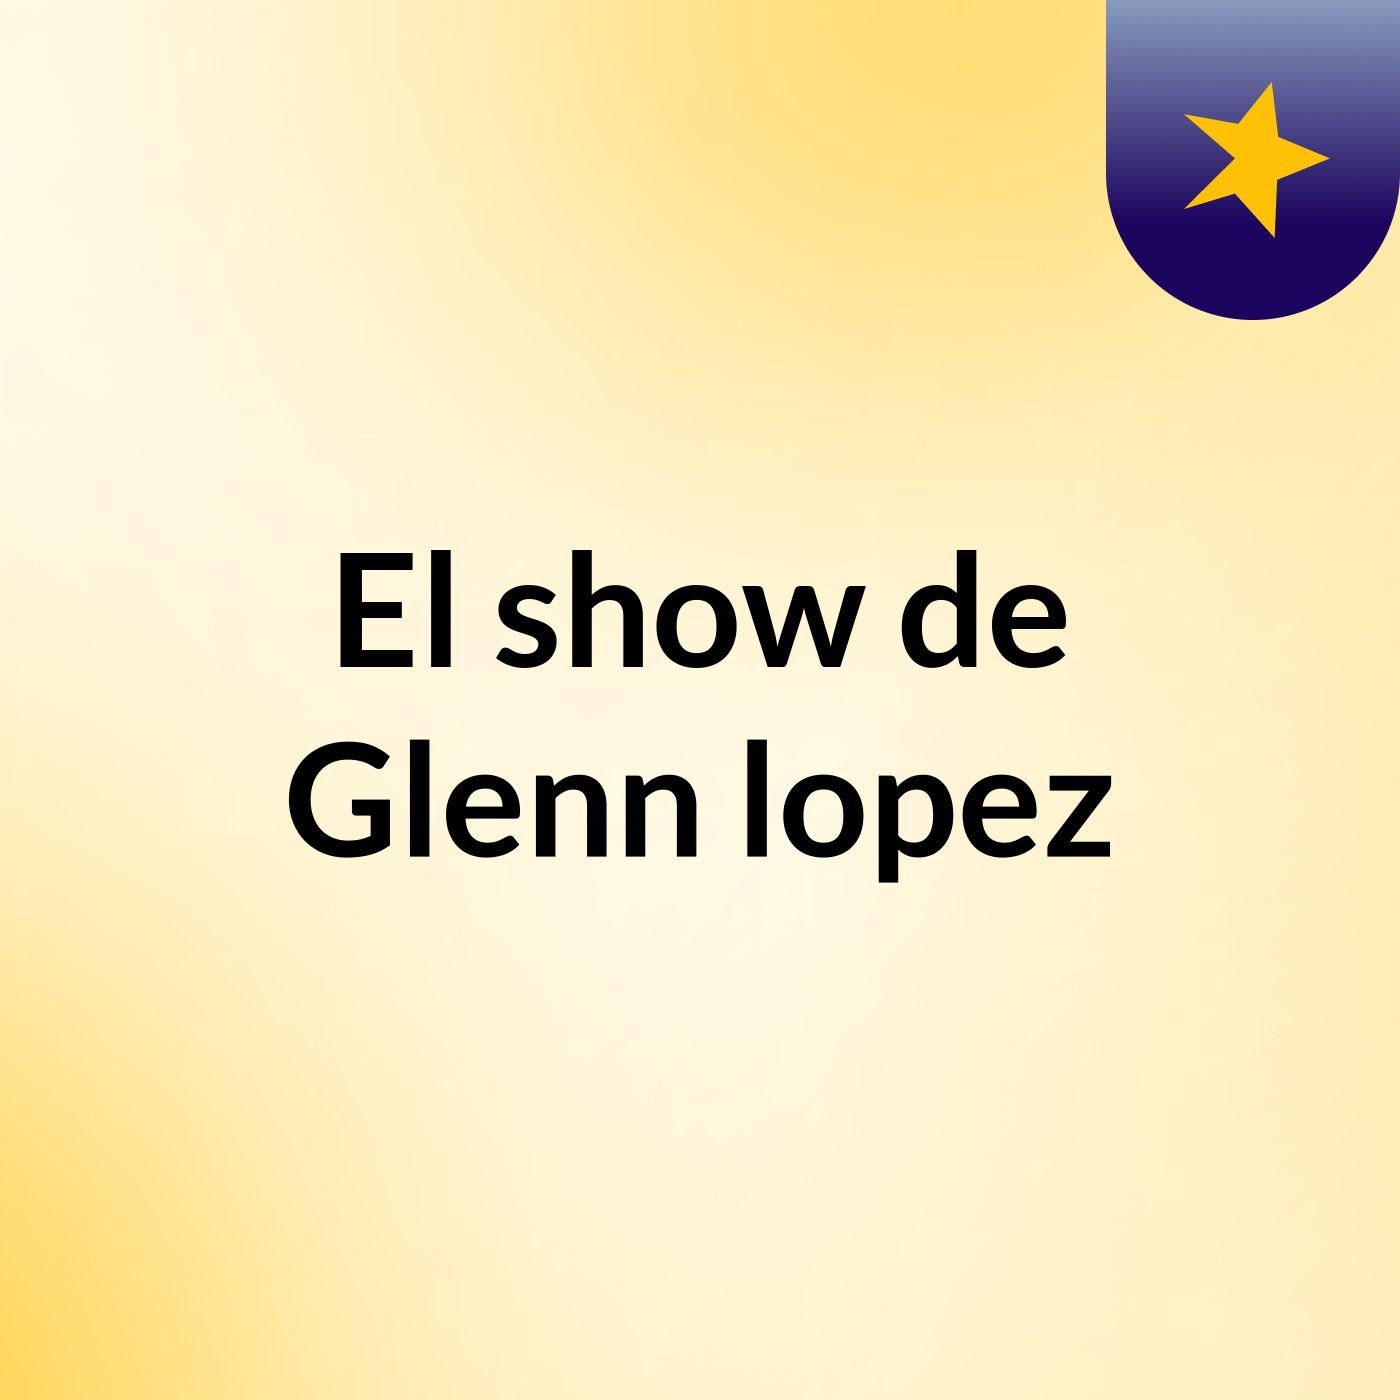 El show de Glenn lopez